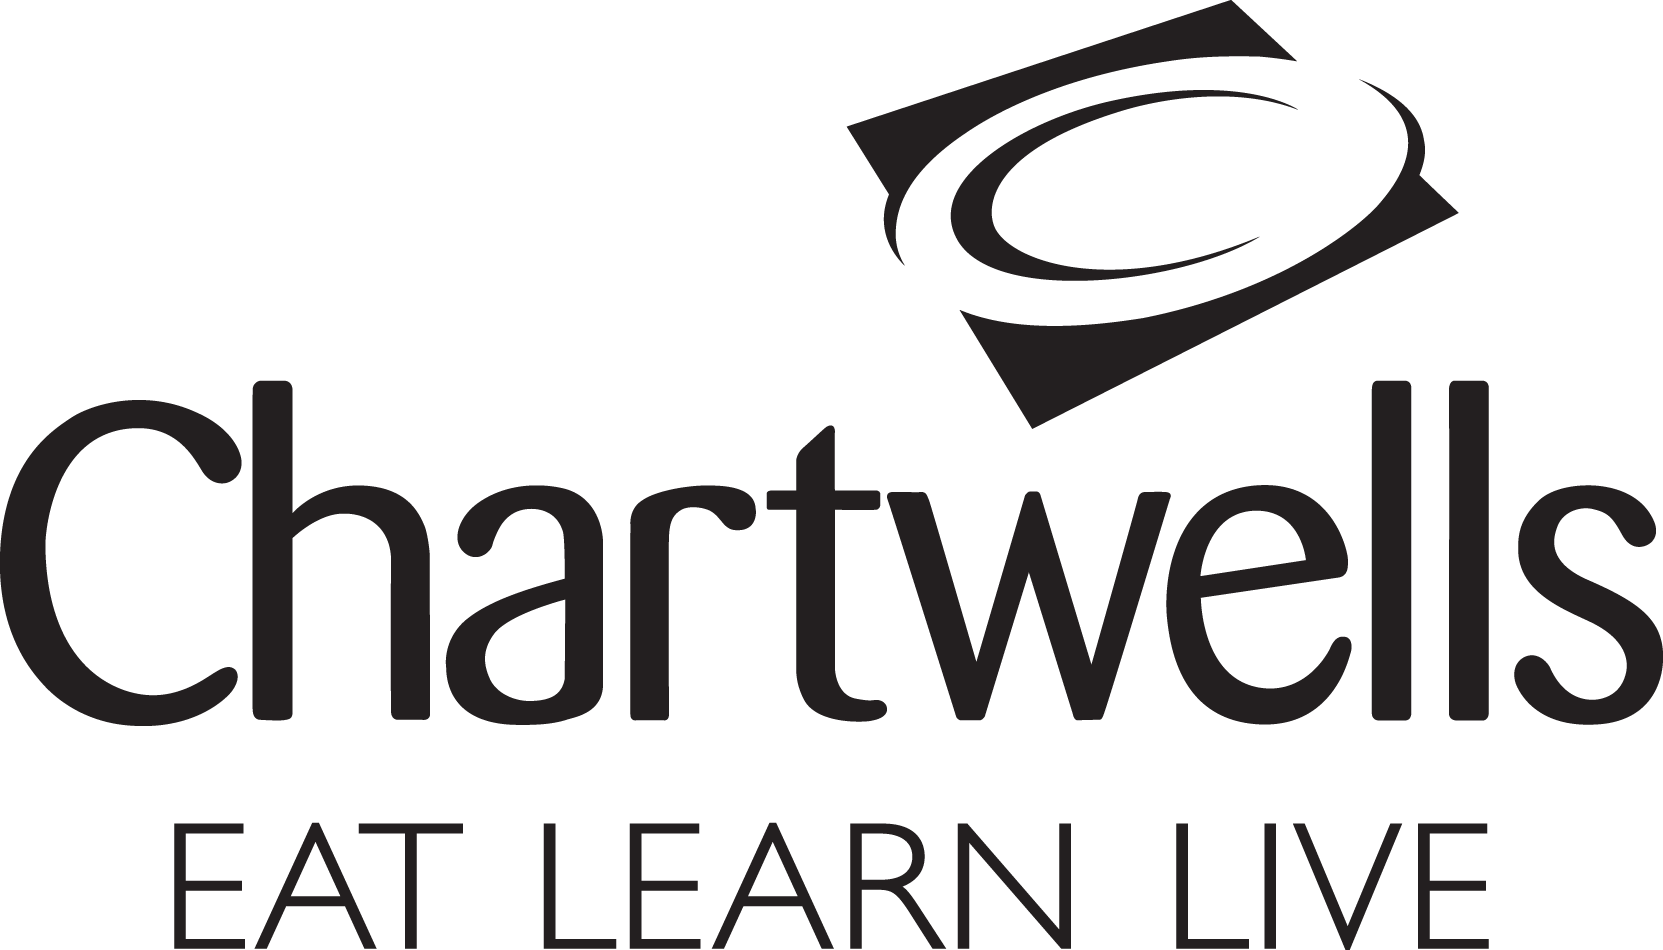 Levys - Chartwells Eat Learn Live Logo (1663x950)